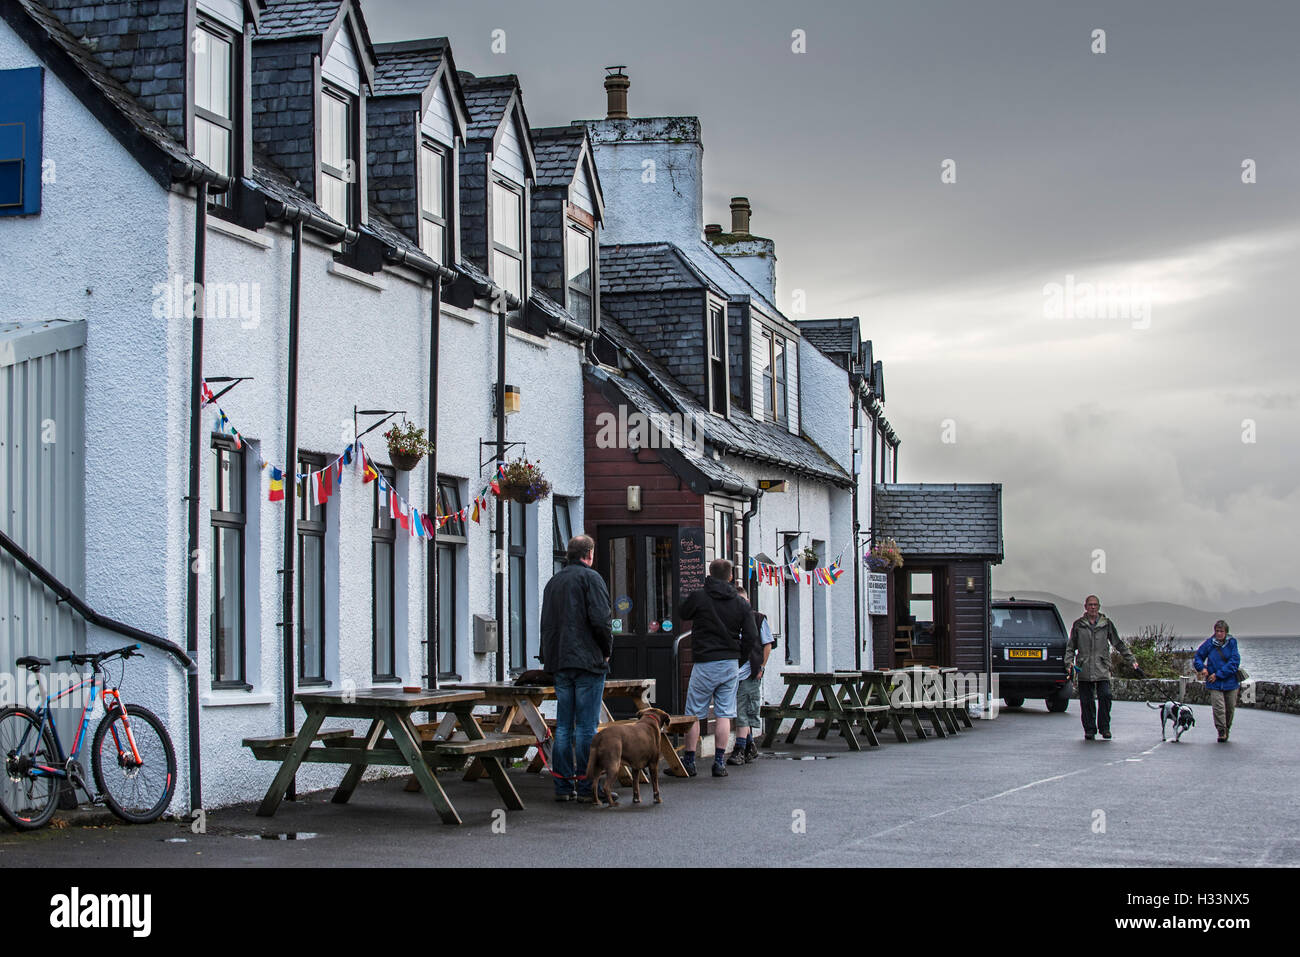 The Applecross Inn on a rainy day, Wester Ross, Scottish Highlands, Scotland, UK Stock Photo